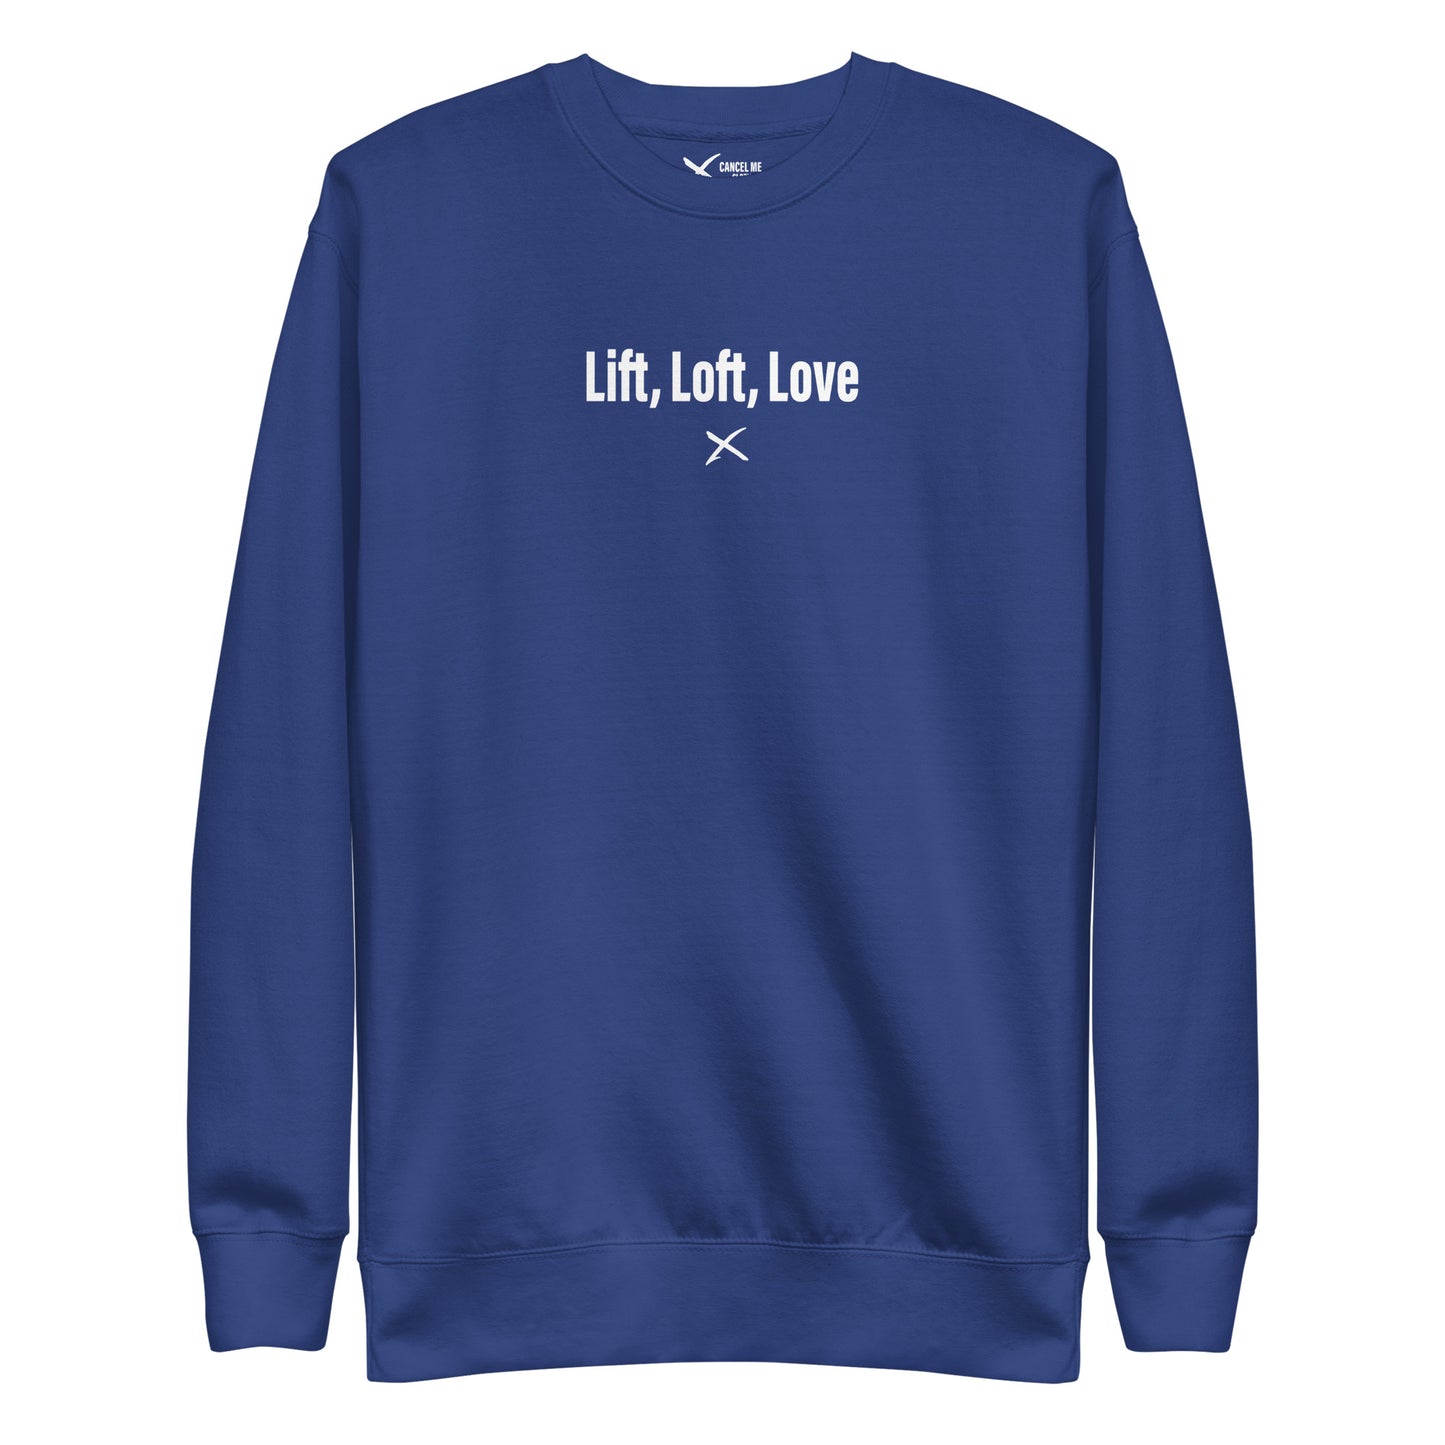 Lift, Loft, Love - Sweatshirt